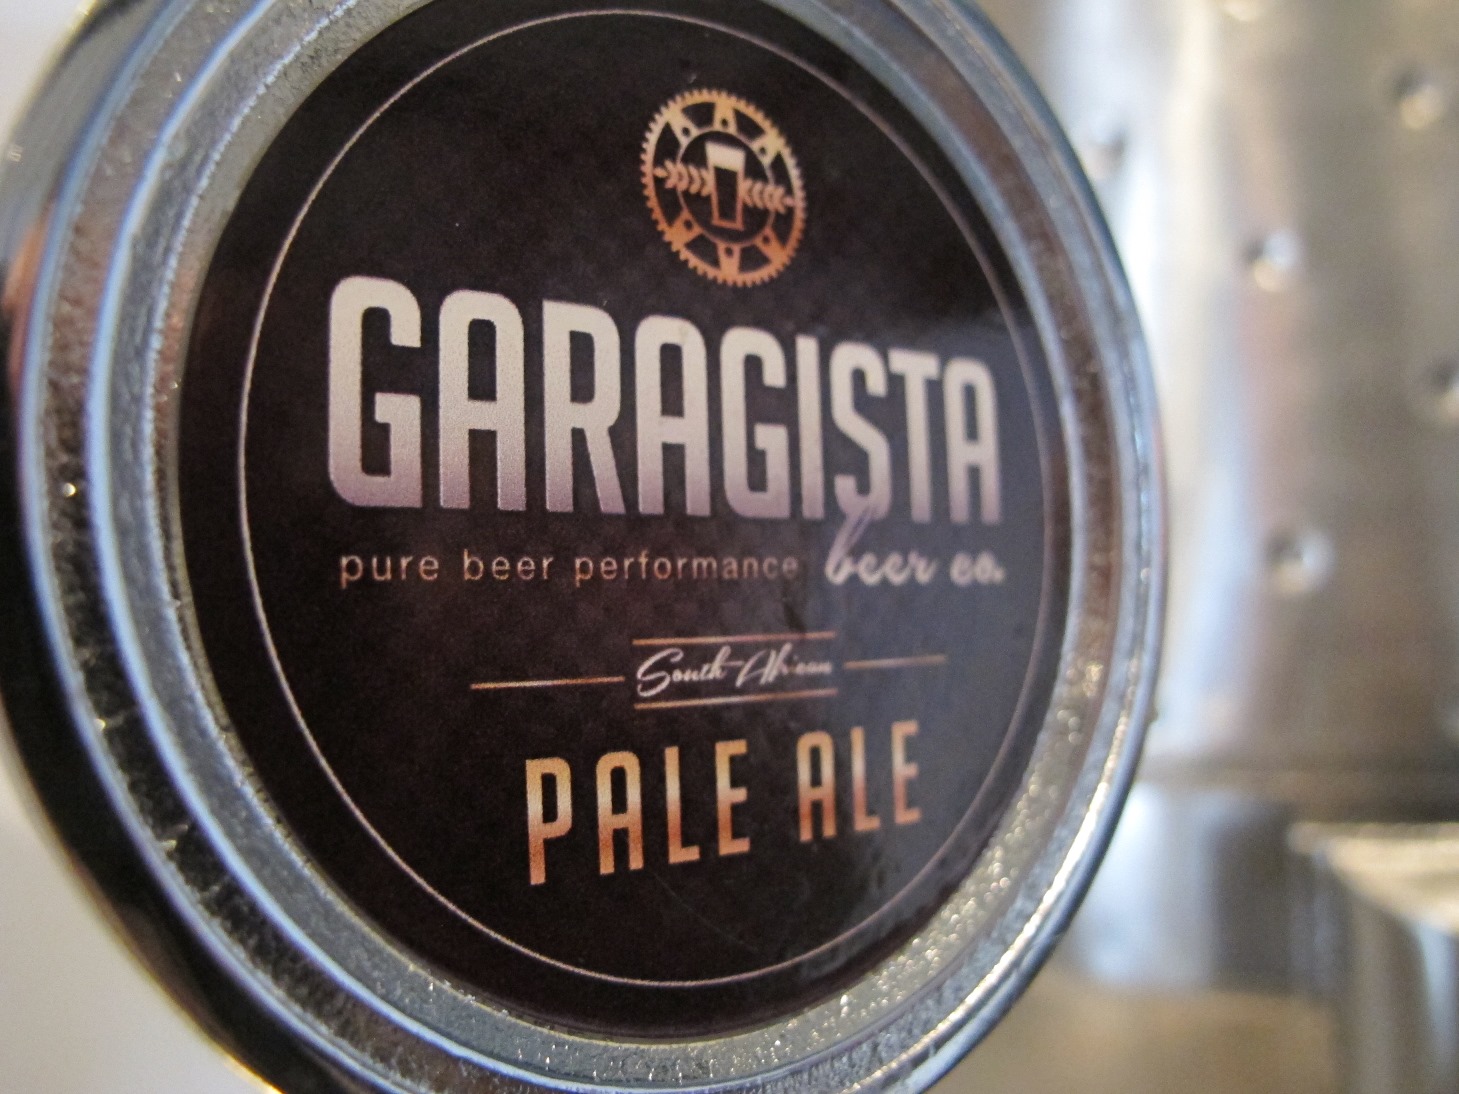 Garagista Beer Co: More hype than hops?